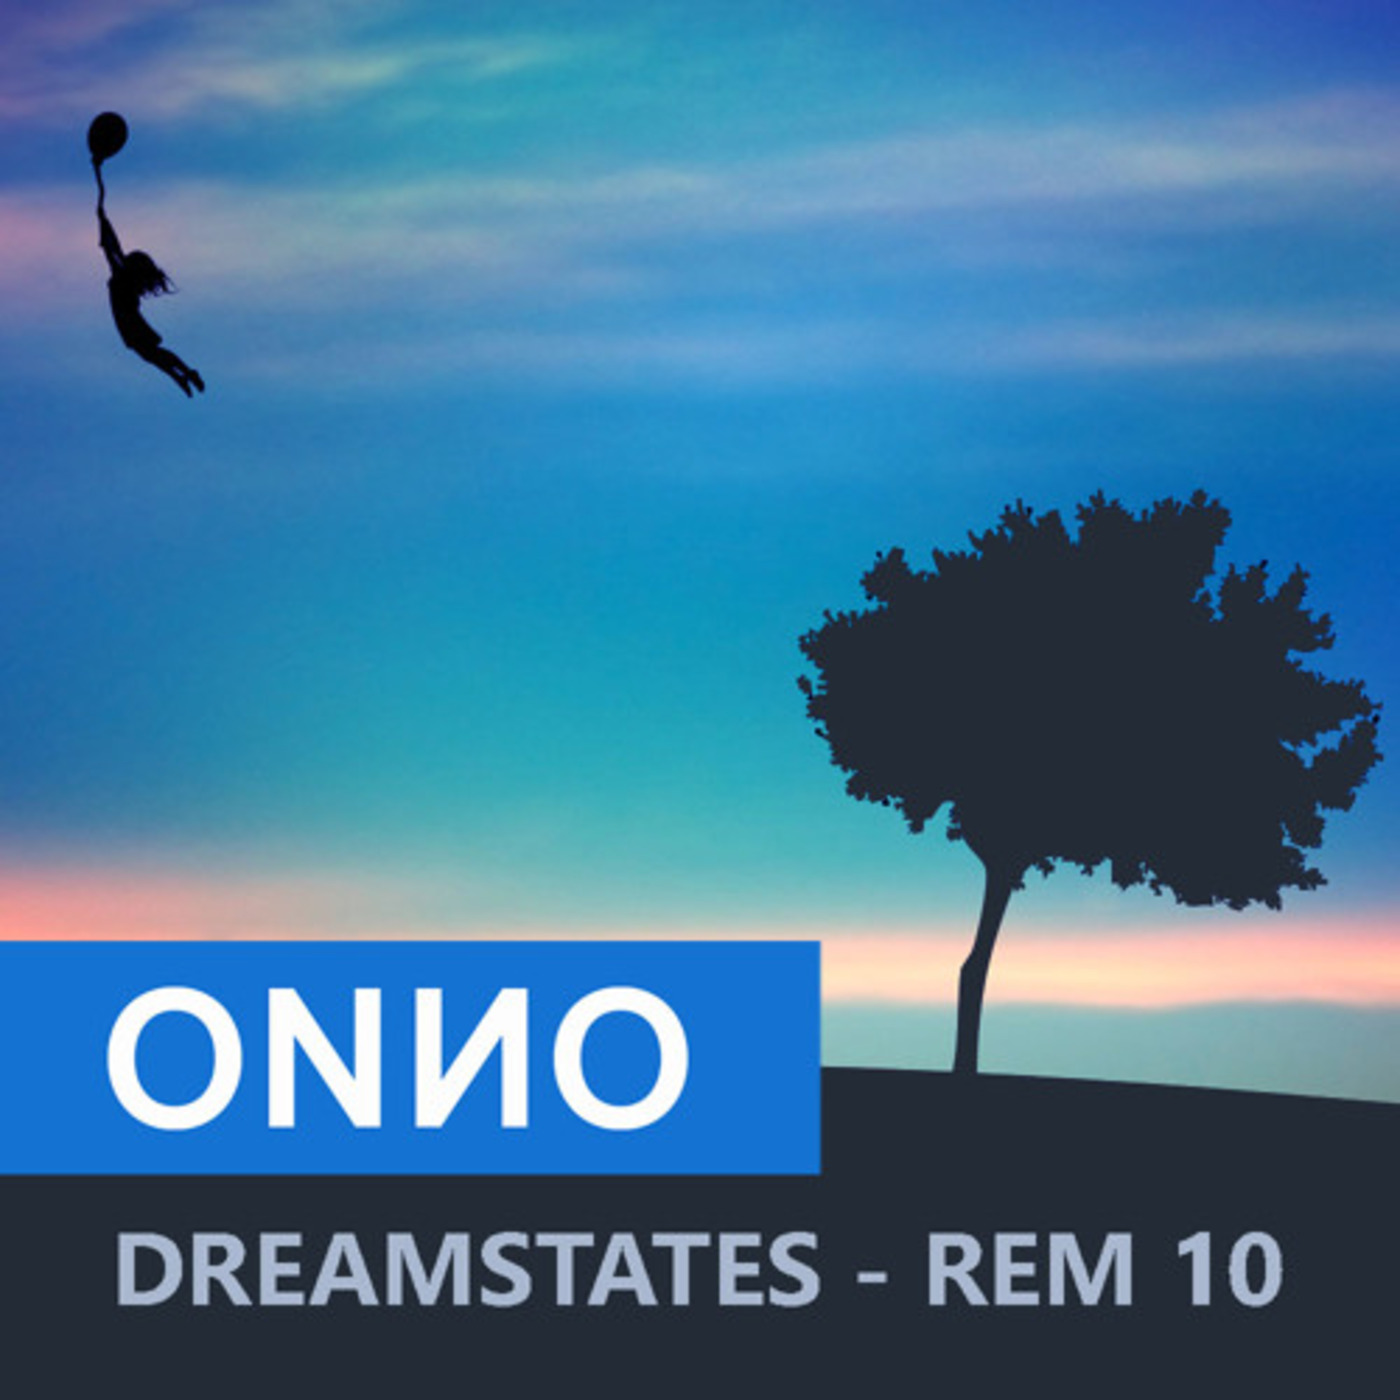 Onno Boomstra - DREAMSTATES - REM 10